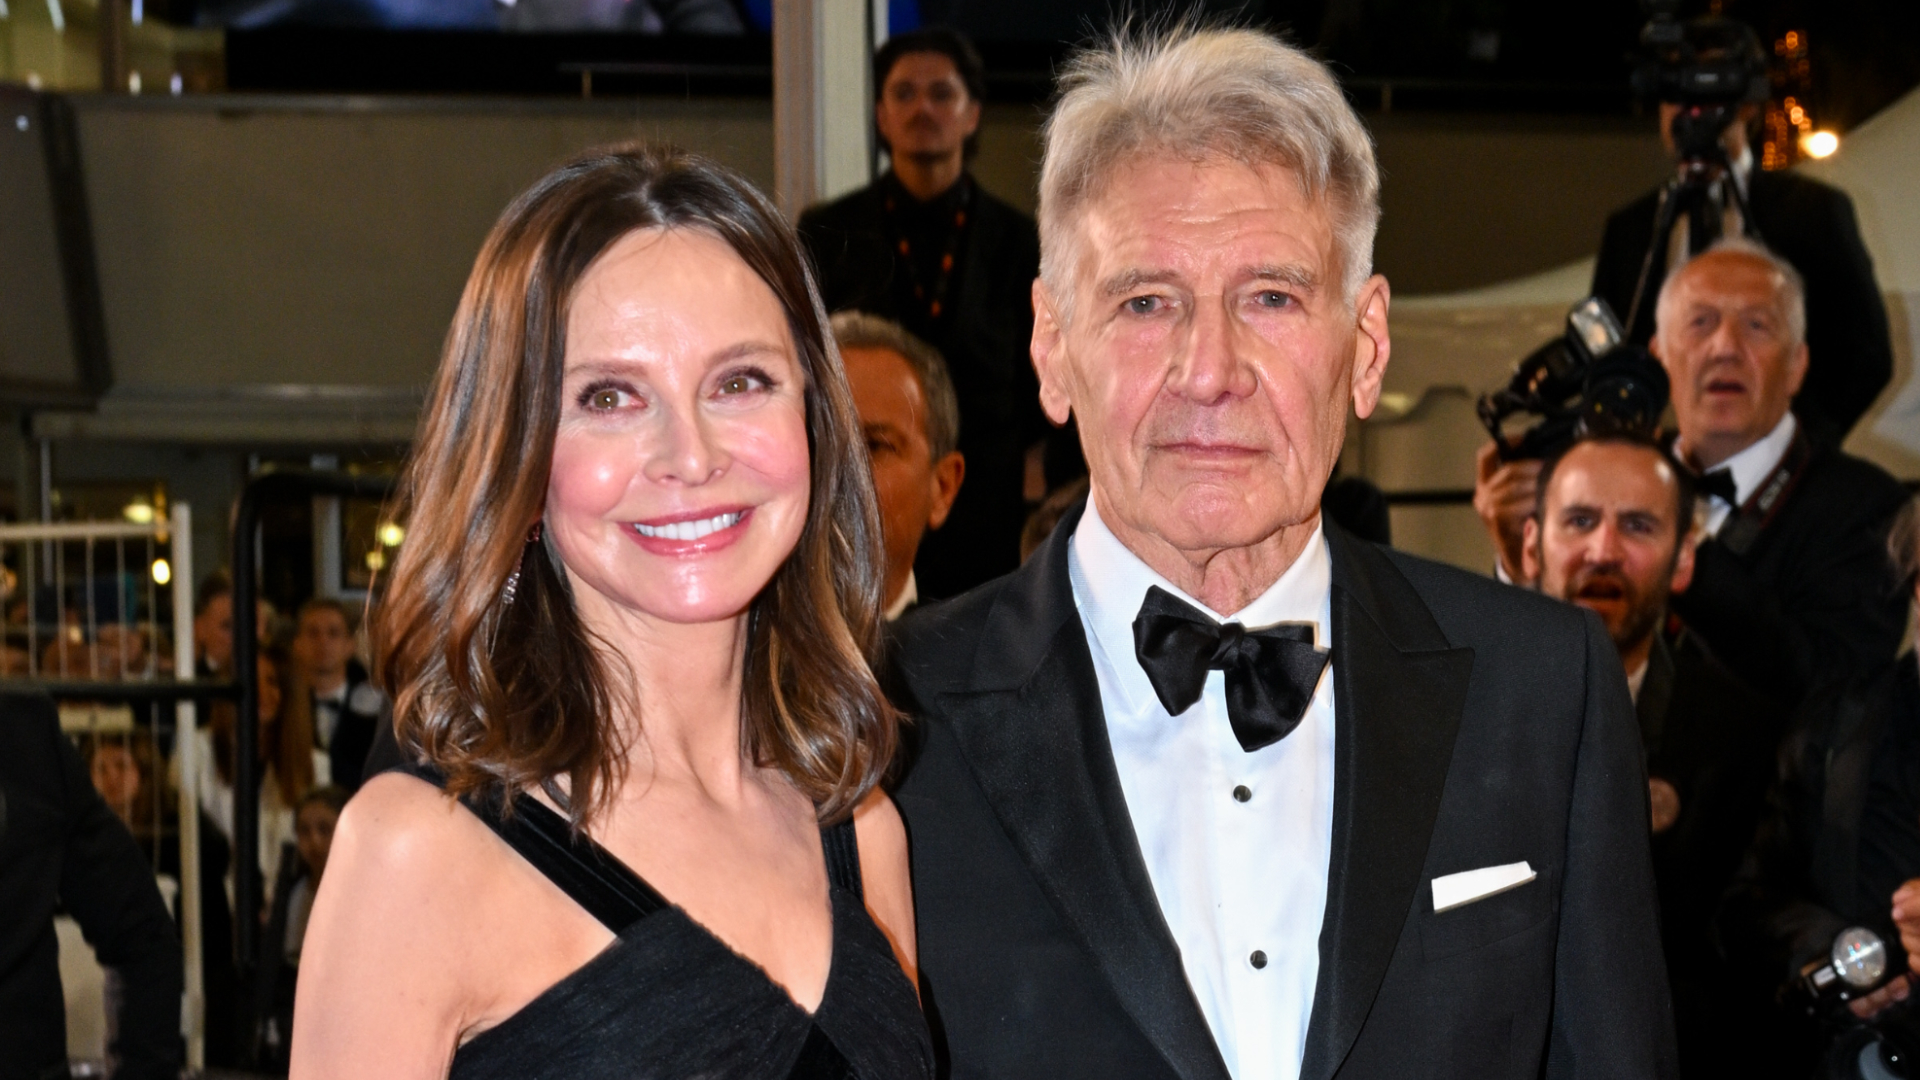 Festival de Cannes comete gafe com esposa de Harrison Ford e momento constrangedor viraliza; assista